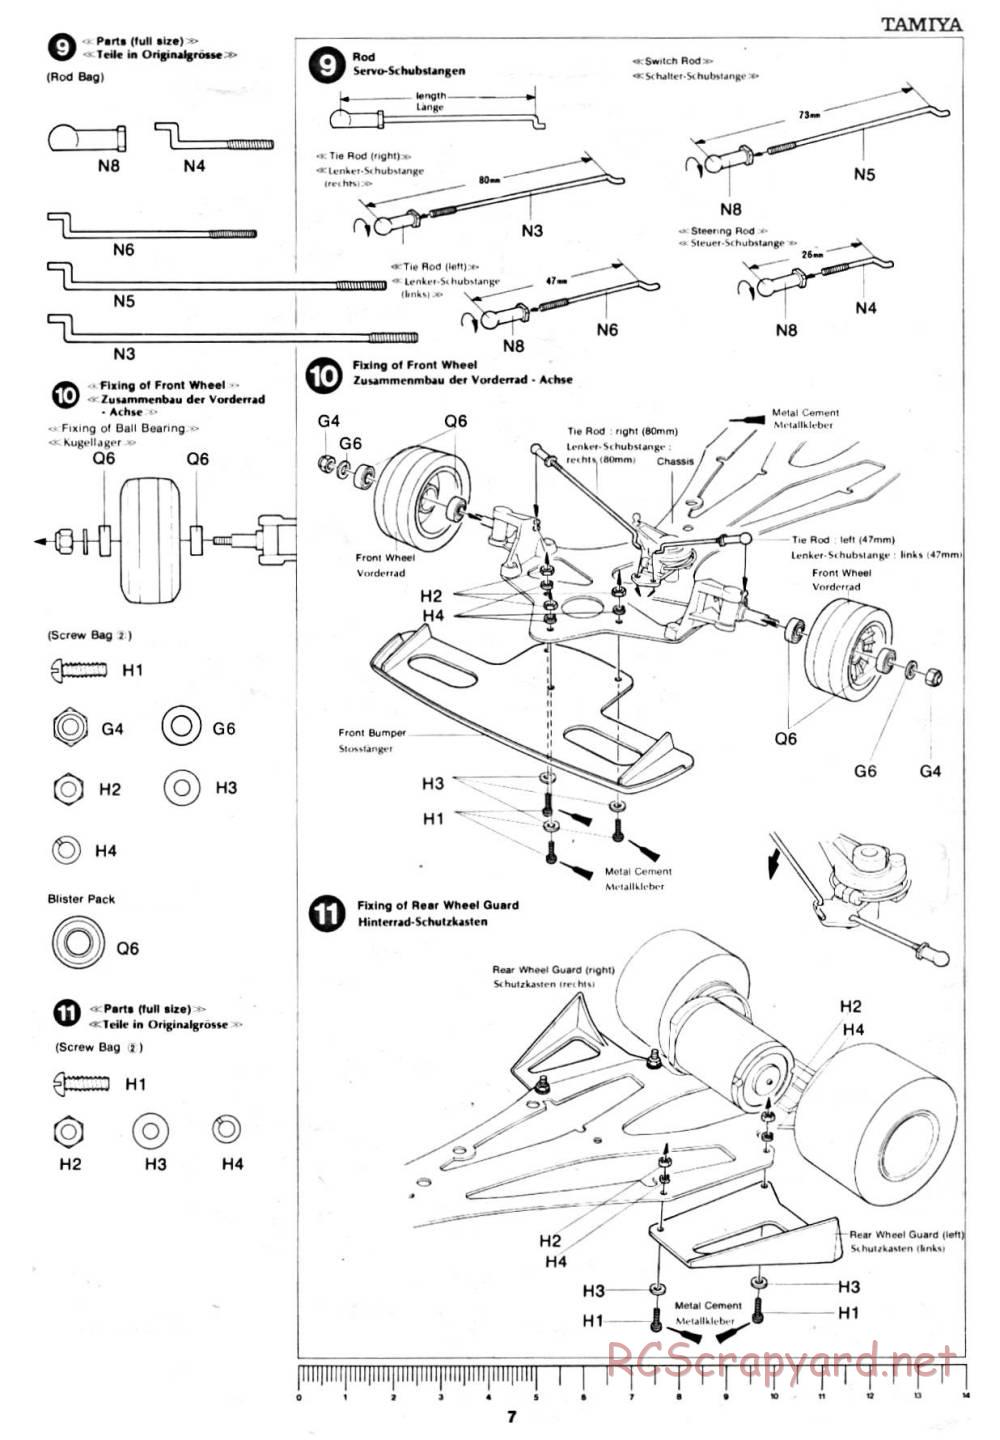 Tamiya - Ligier JS9 Matra (CS) - 58012 - Manual - Page 7